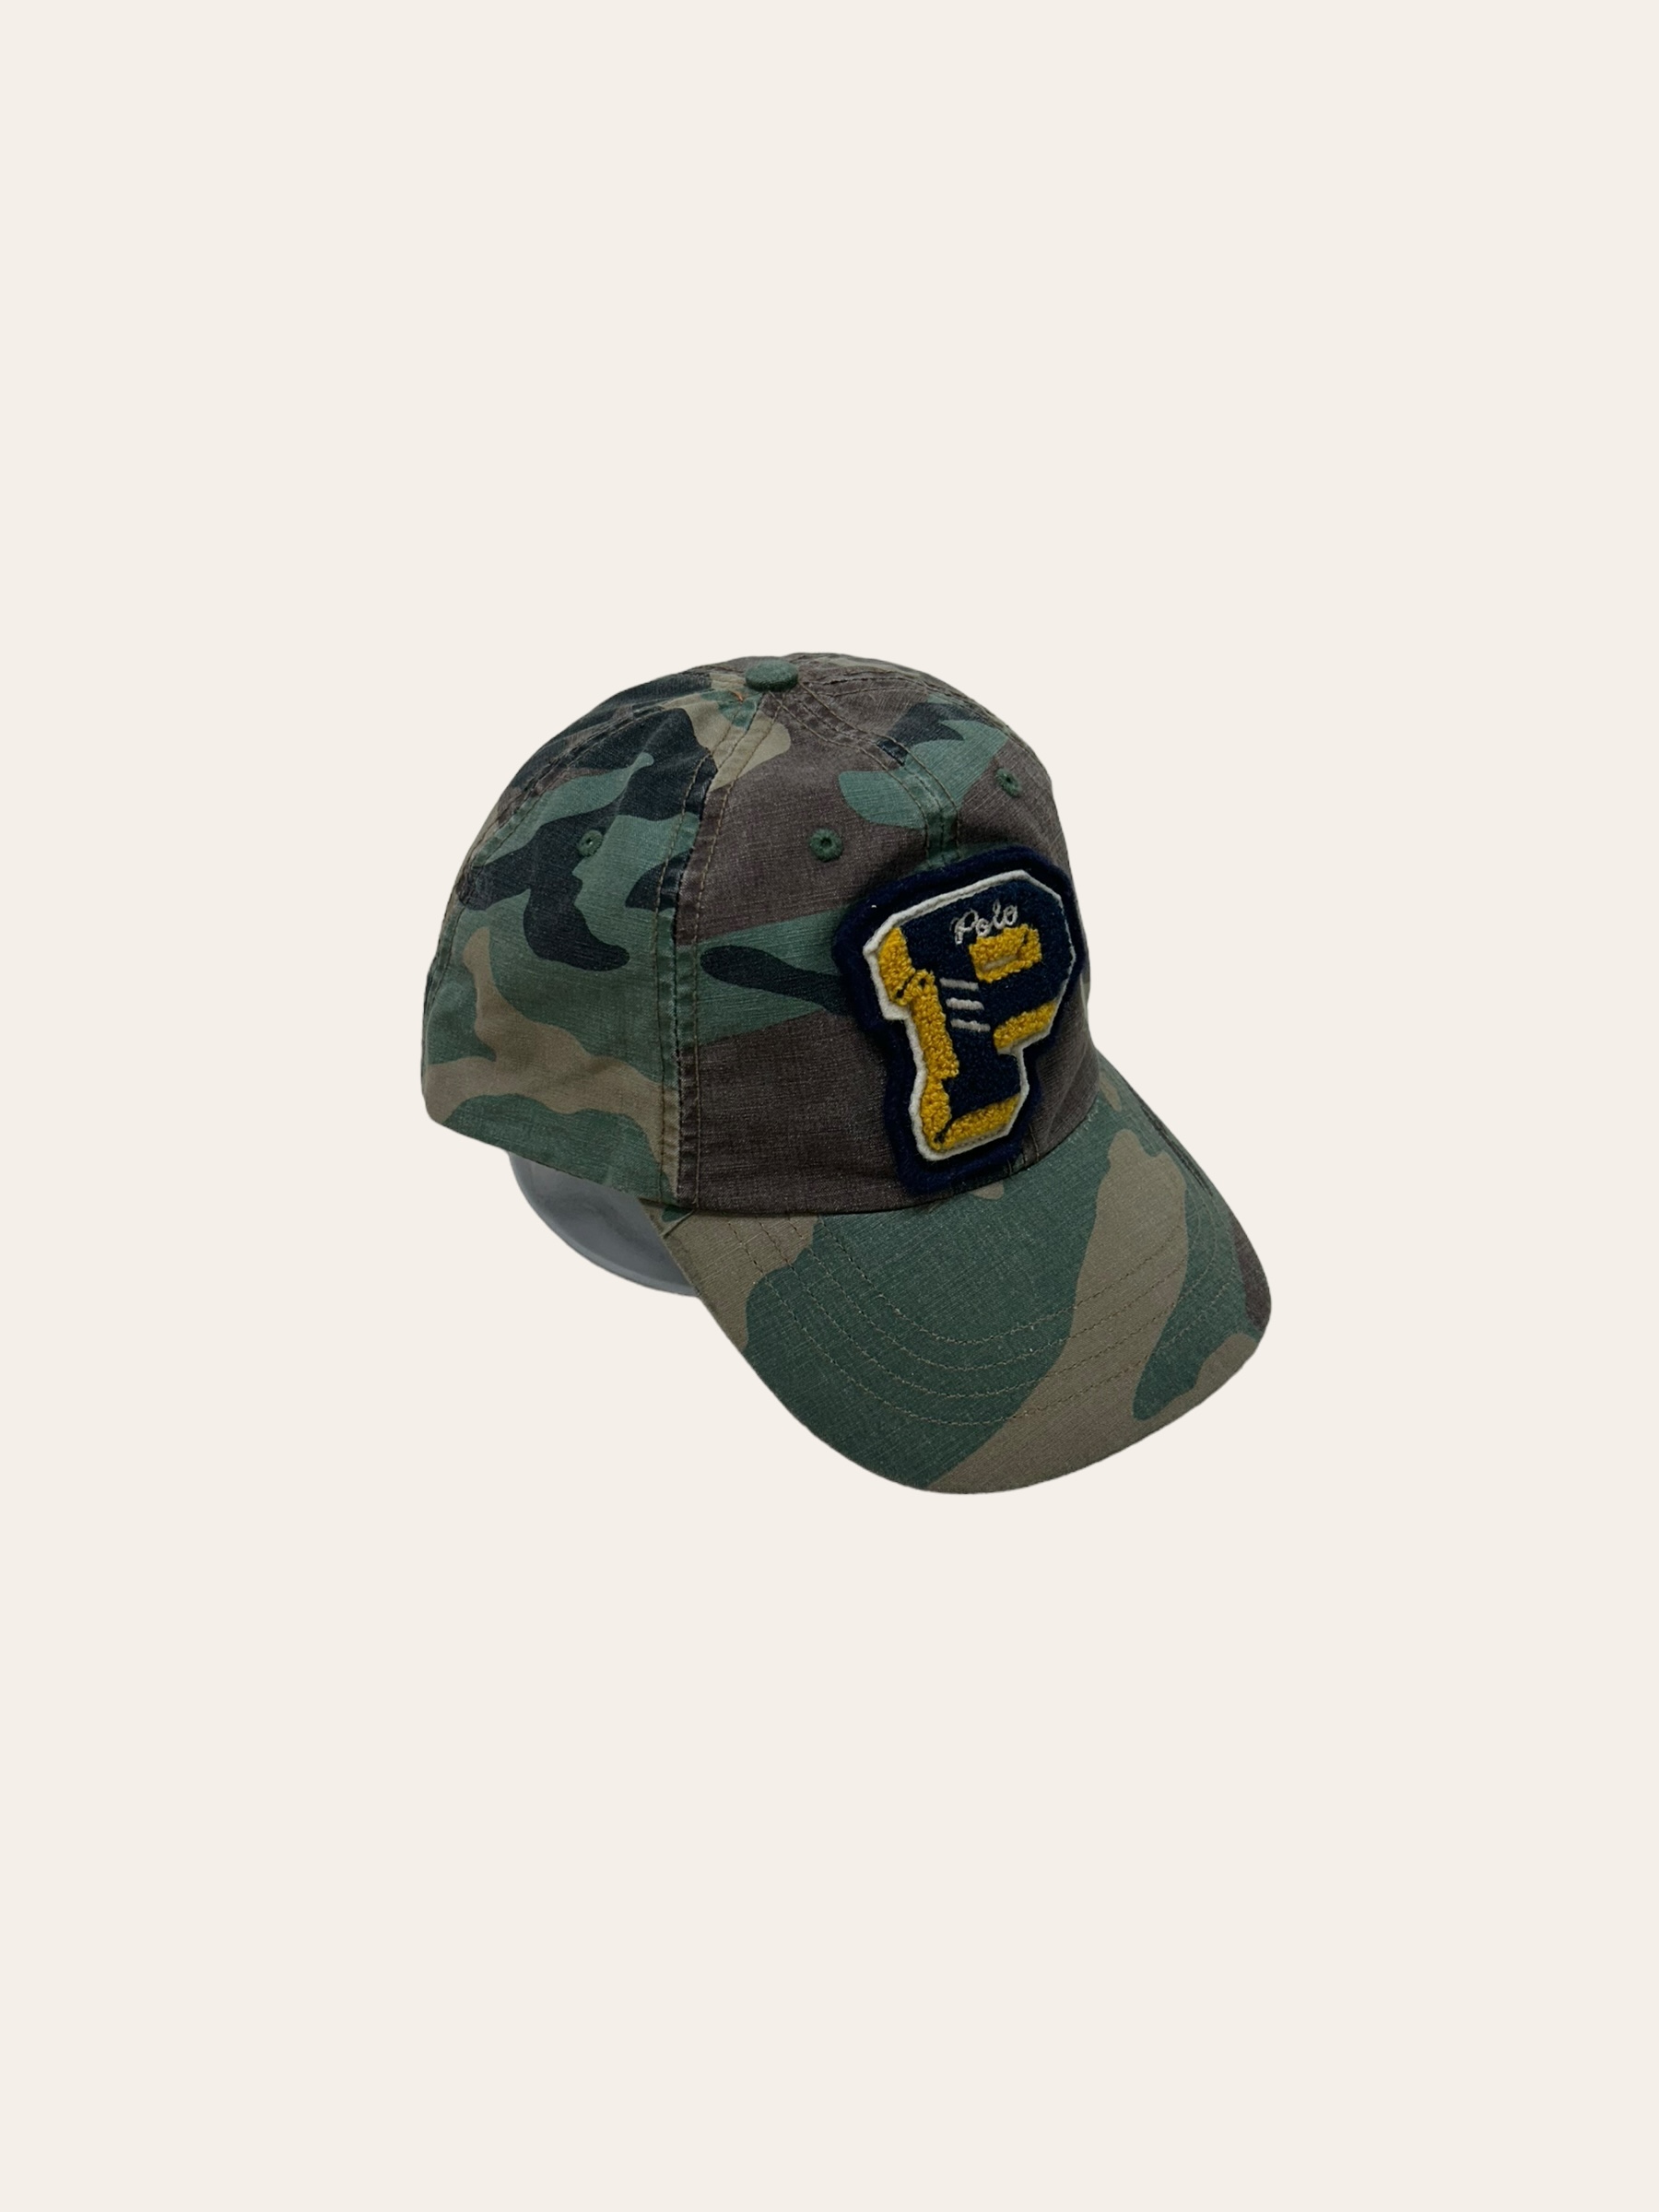 Polo ralph lauren P logo camouflage cap